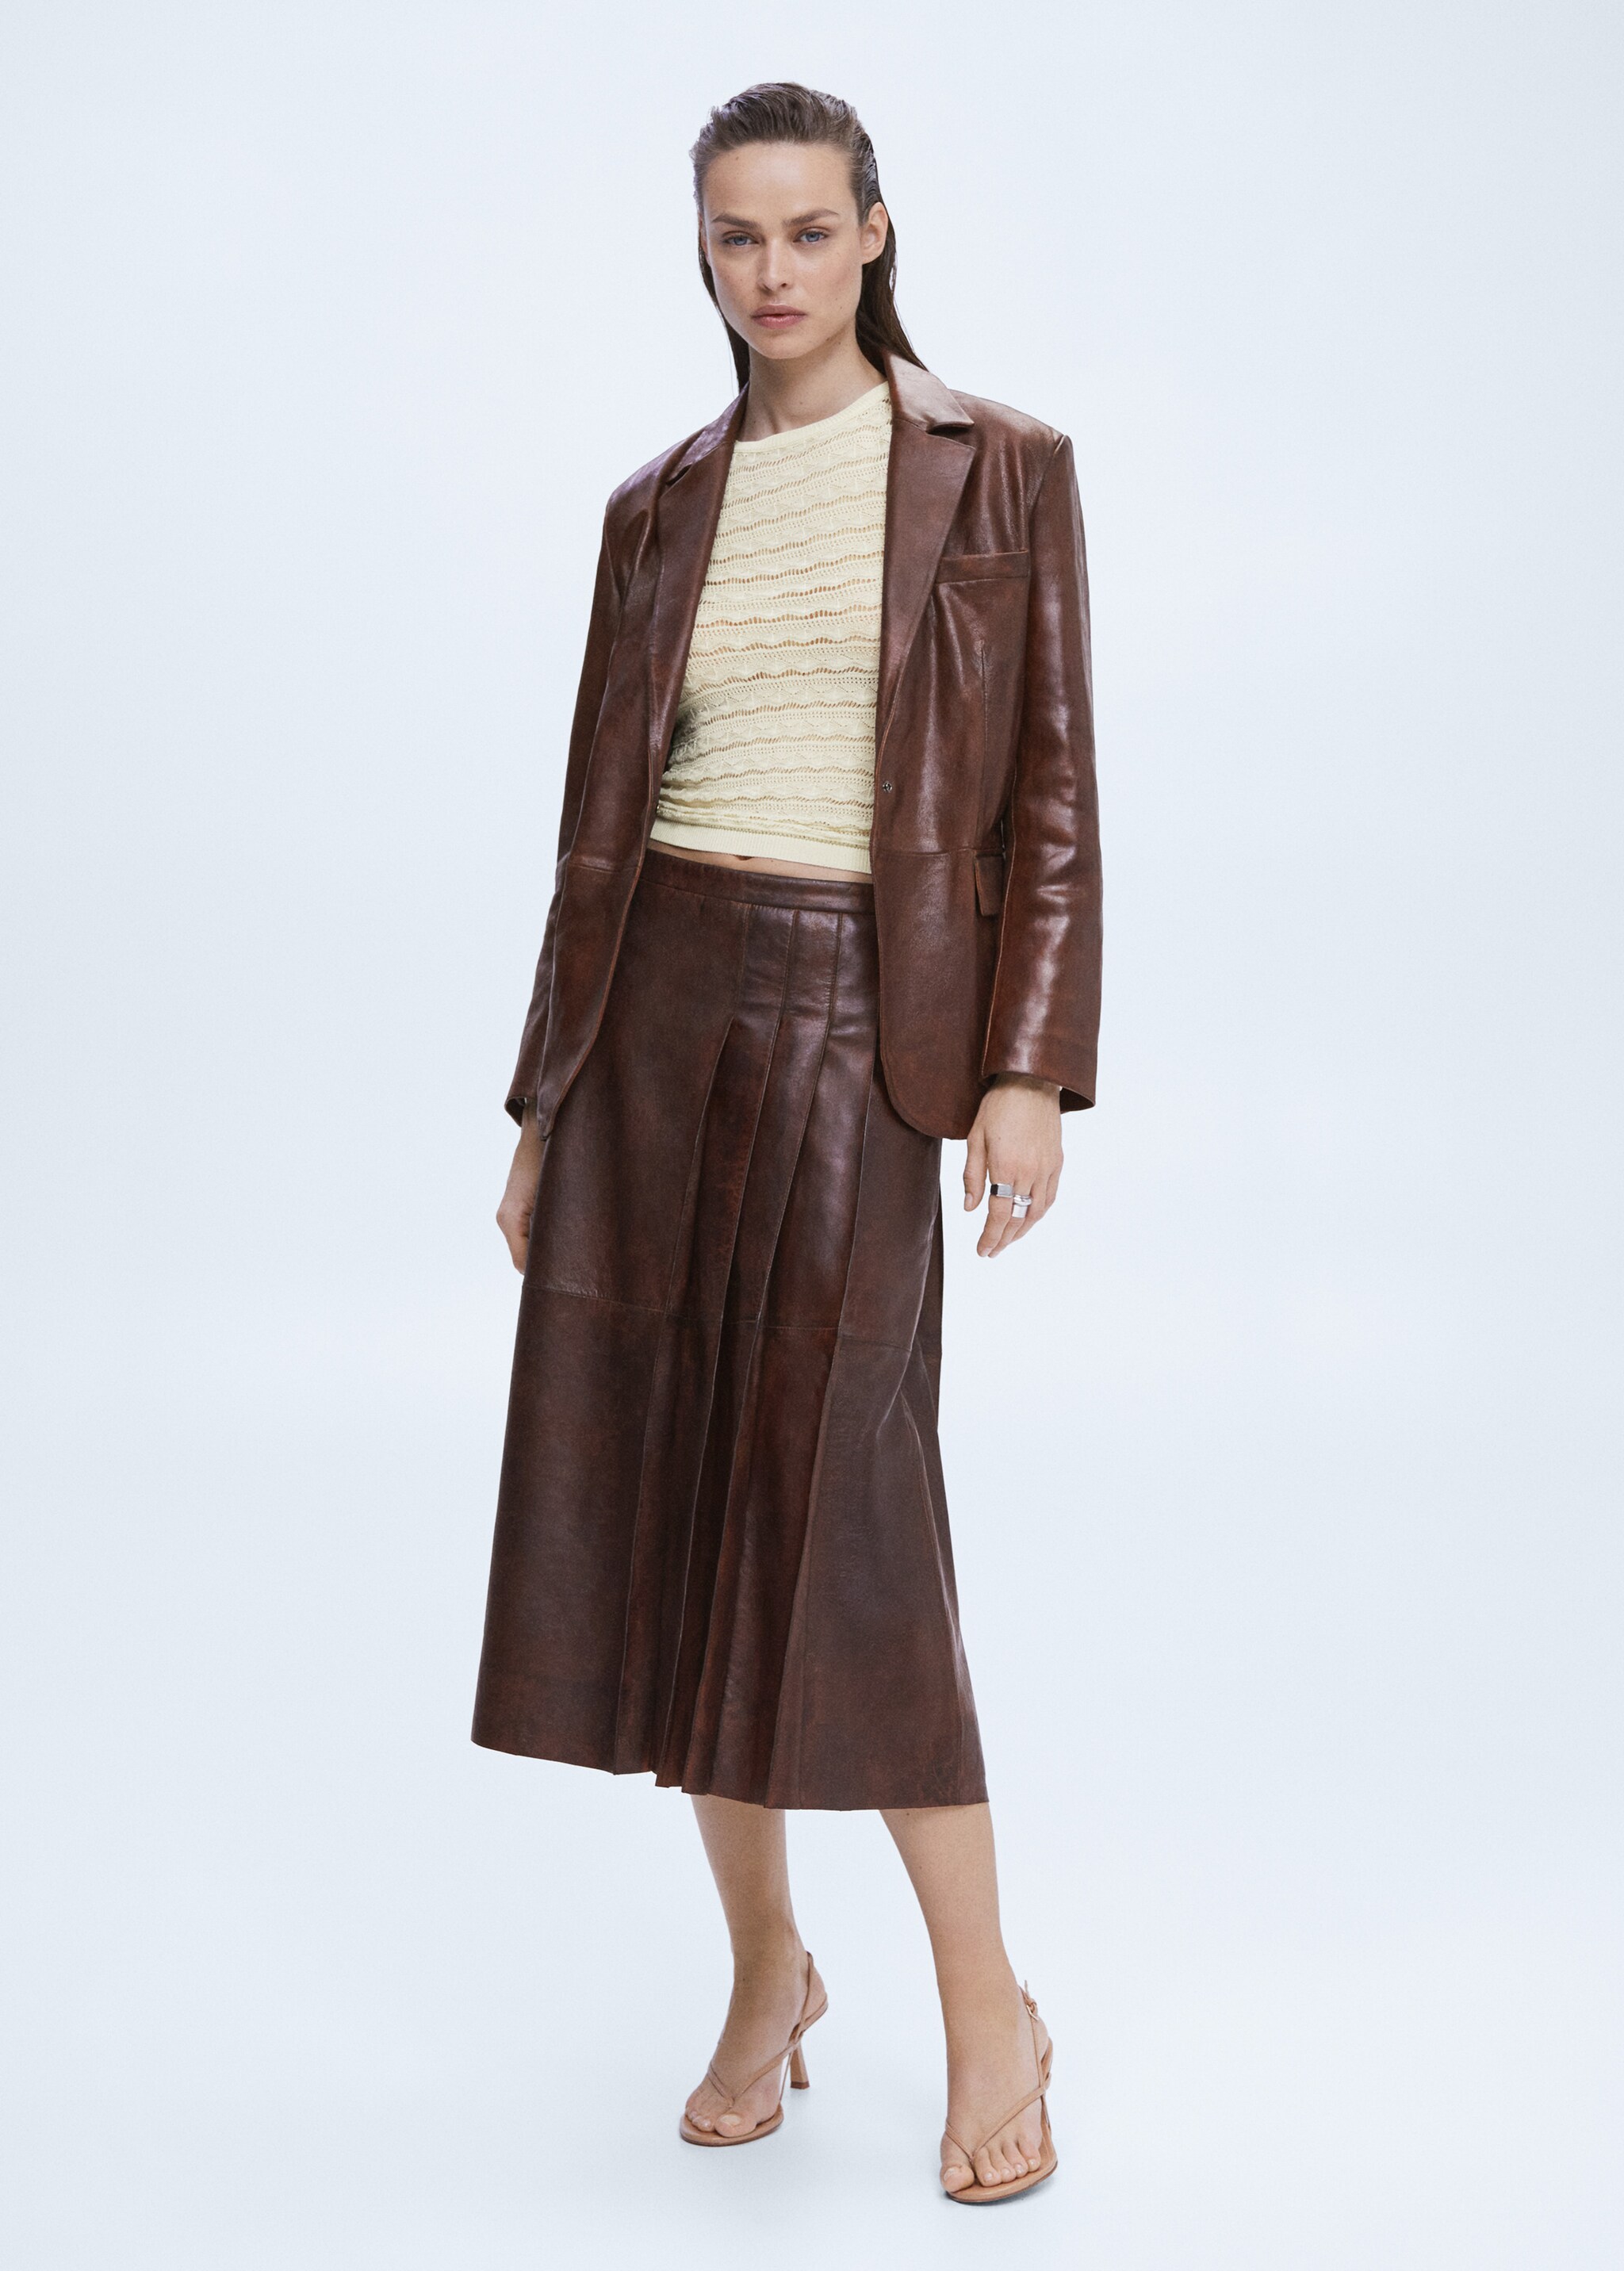 Leather midi-skirt - General plane